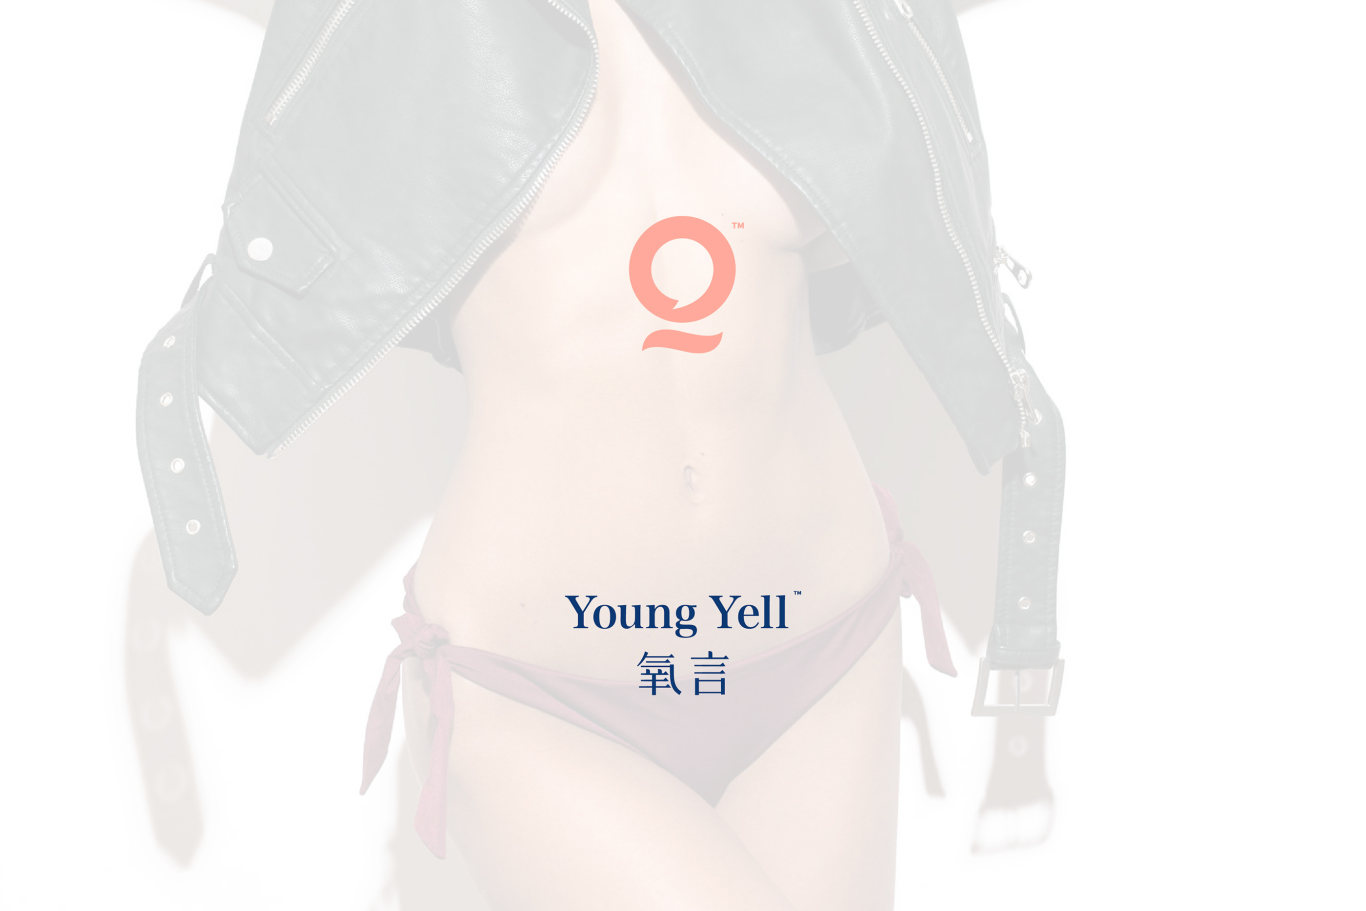 氧言品牌VI设计 Young Yell Brand VI Design | 高端内衣服装行业LOGO设计图12